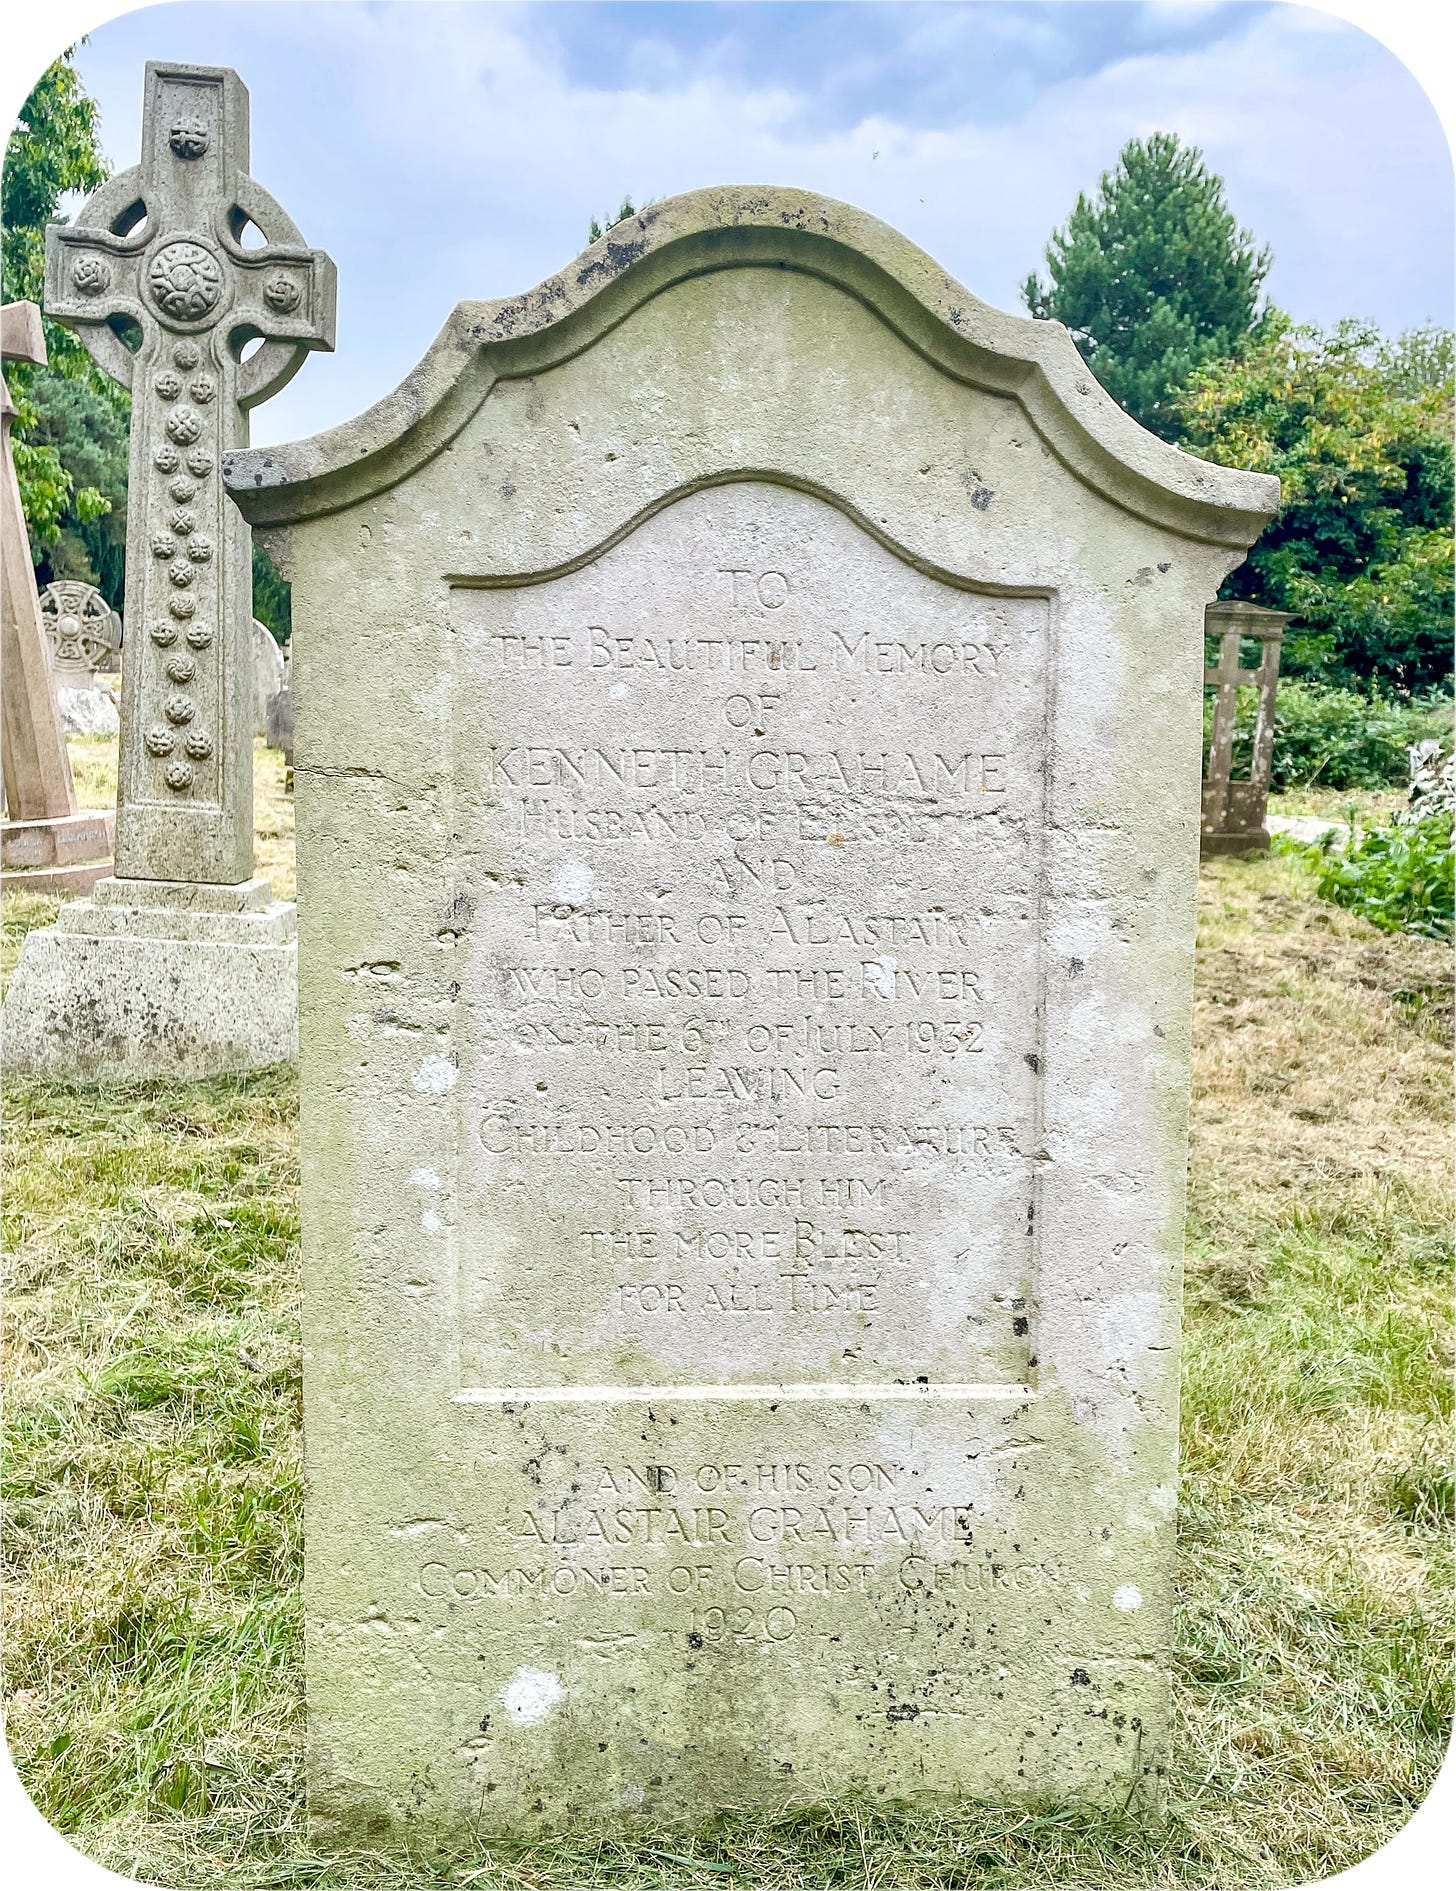 Kenneth Grahame's grave, Oxford, England.